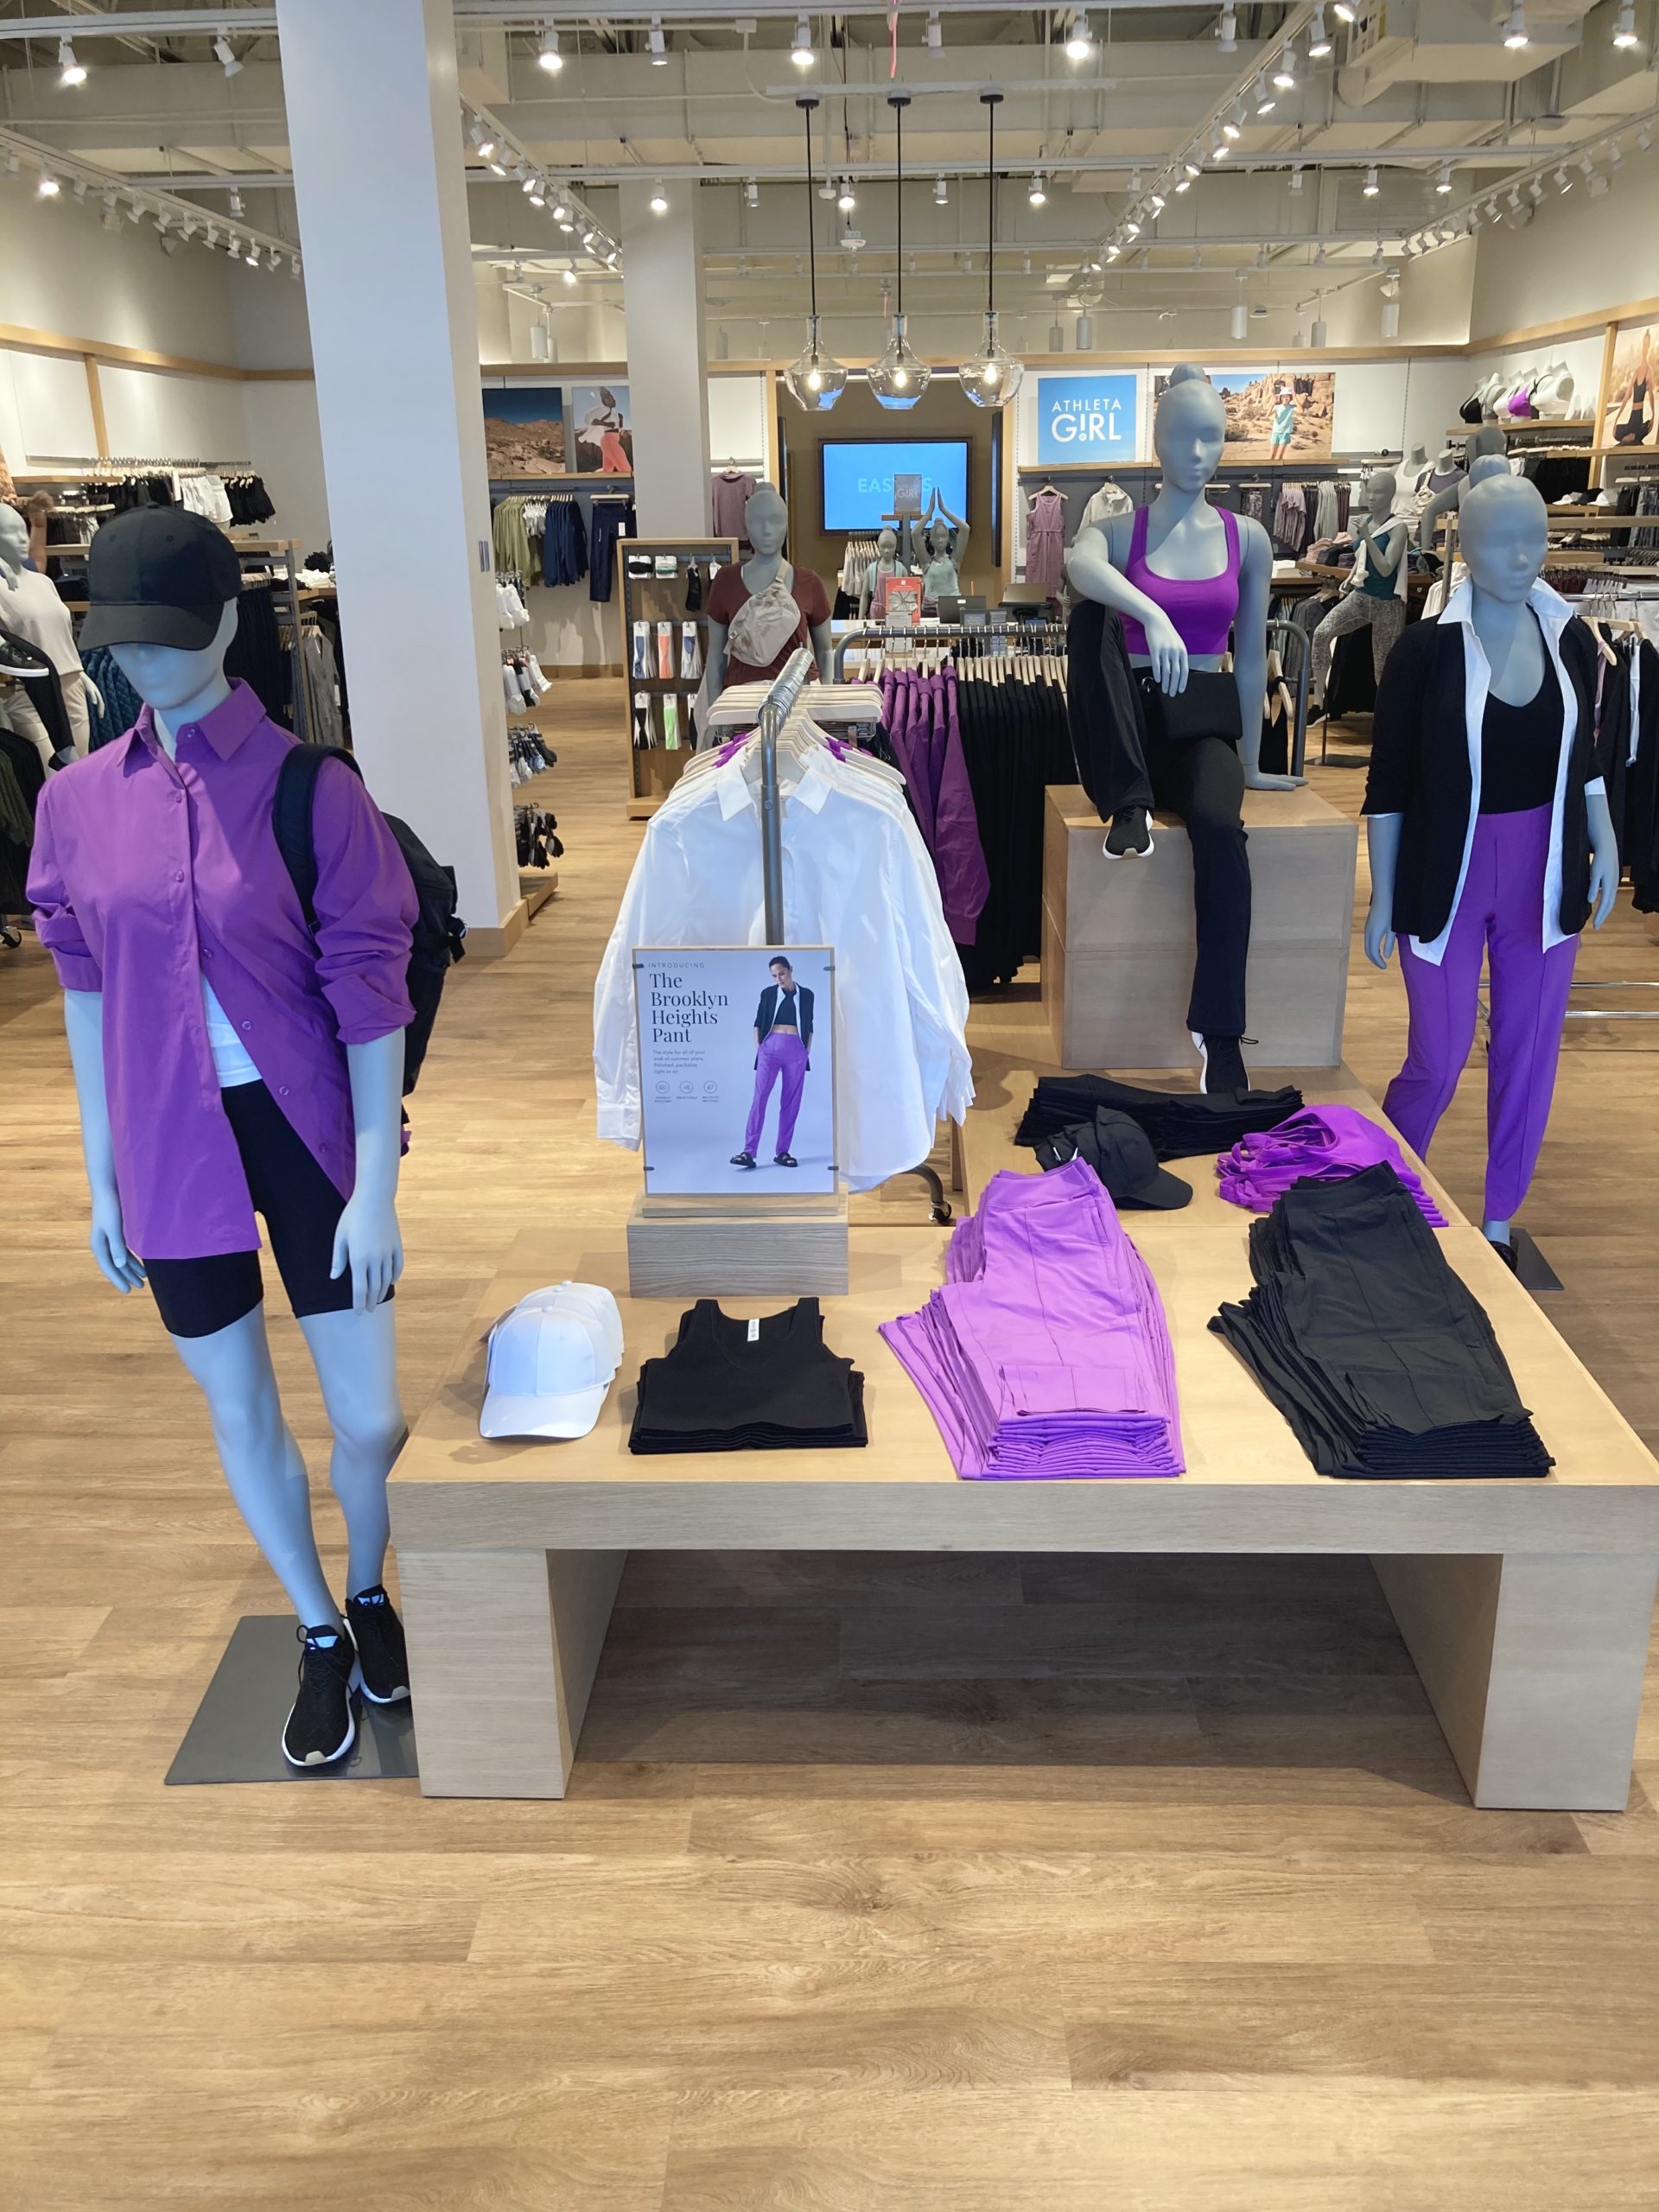 Women's activewear brand Athleta opens store at Gilbert mall